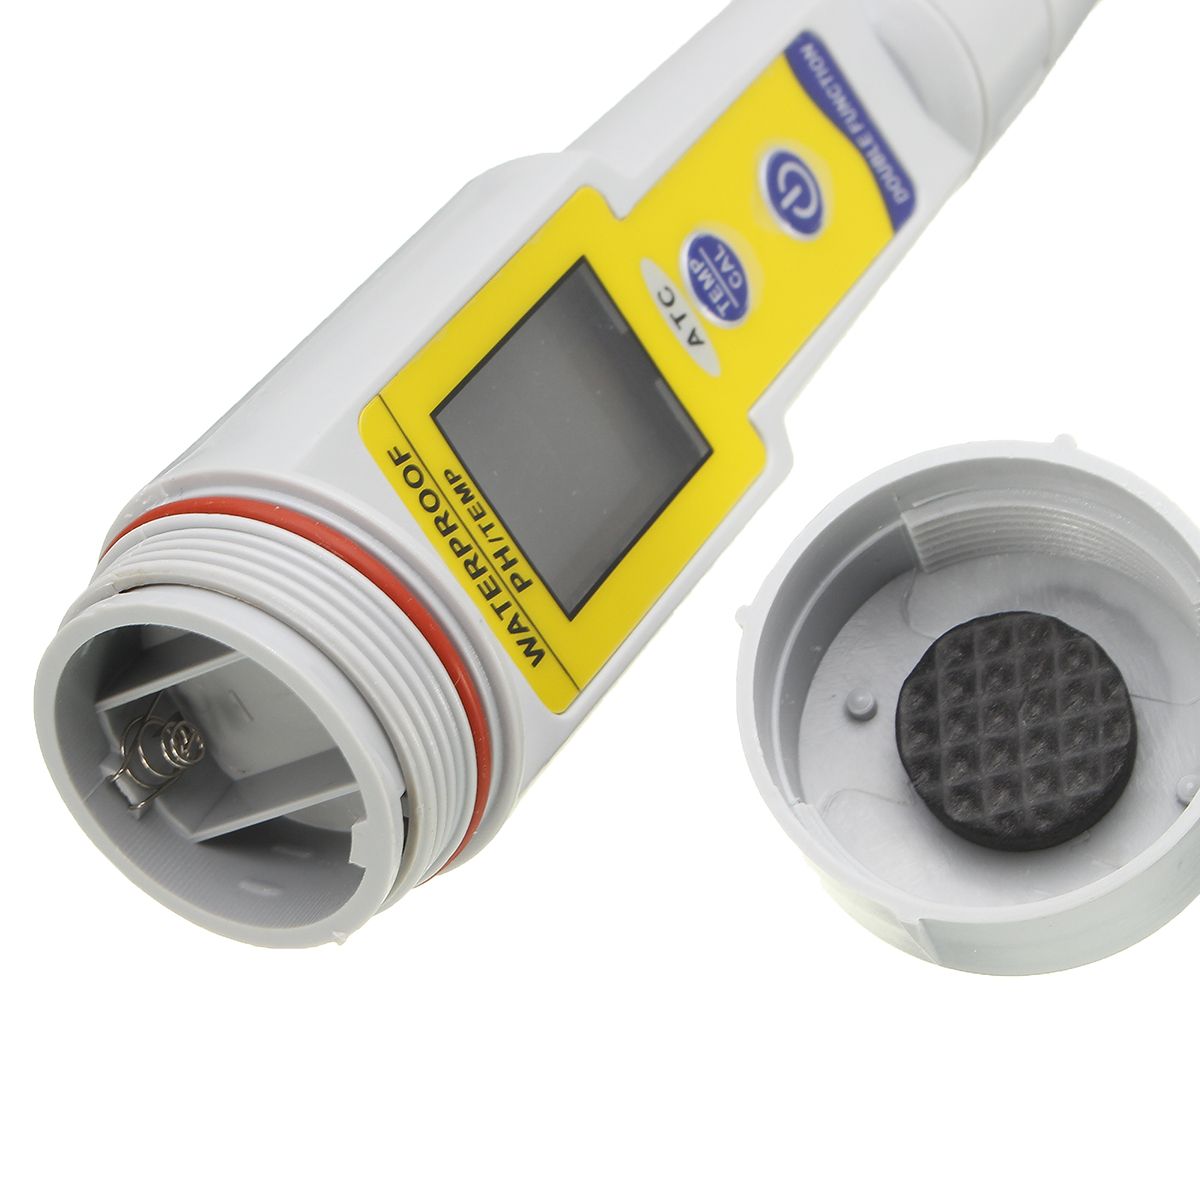 Auto-Calibration-Digital-PH-Tester-Meter-Thermometer-Kit-Waterproof-Pocket-Pen-1128969